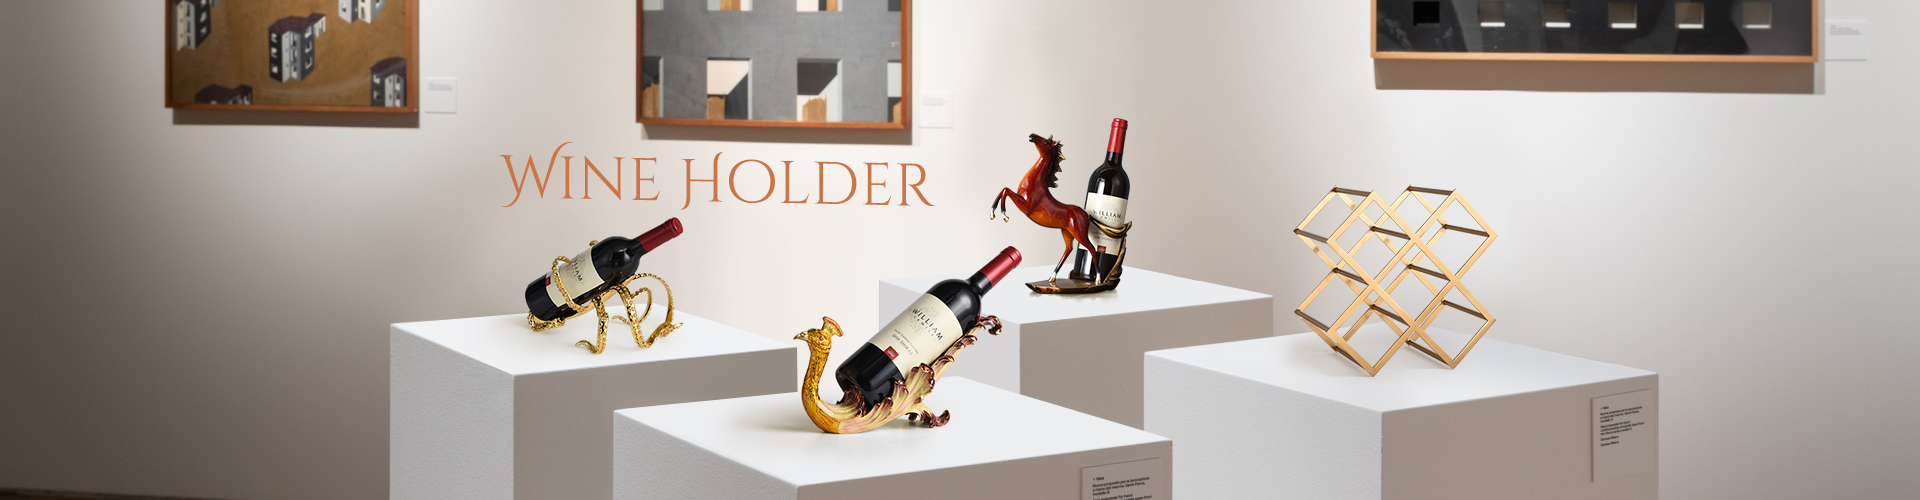 wine-holder